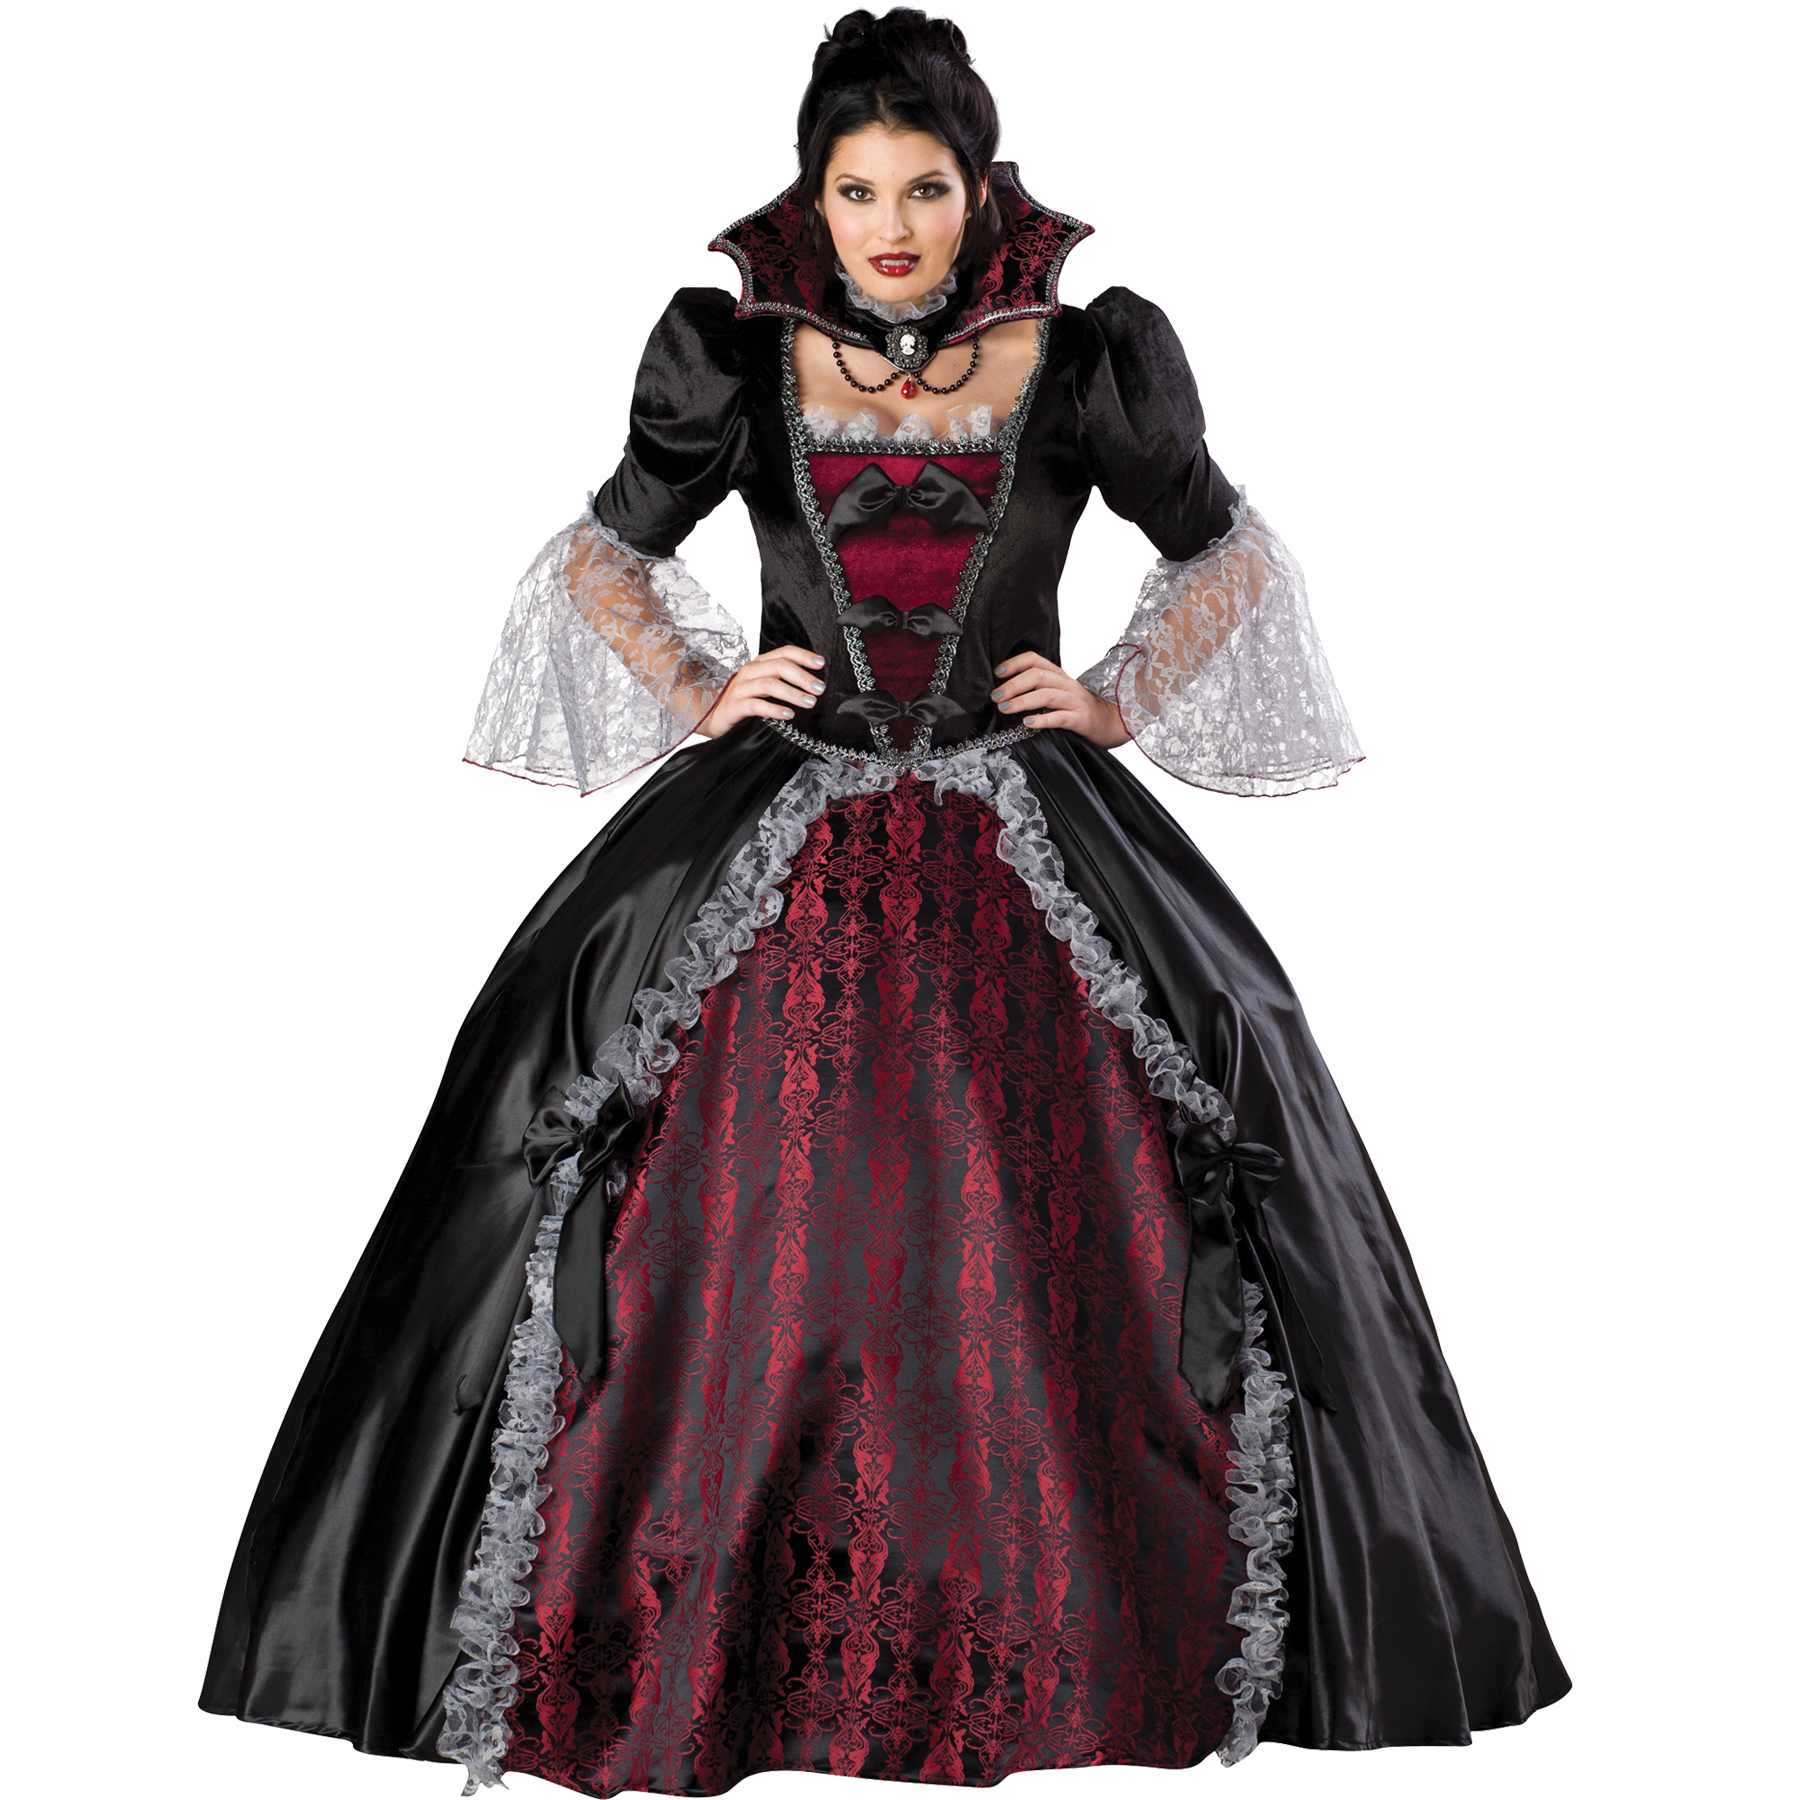 Women's Vampiress Of Versailles Costume